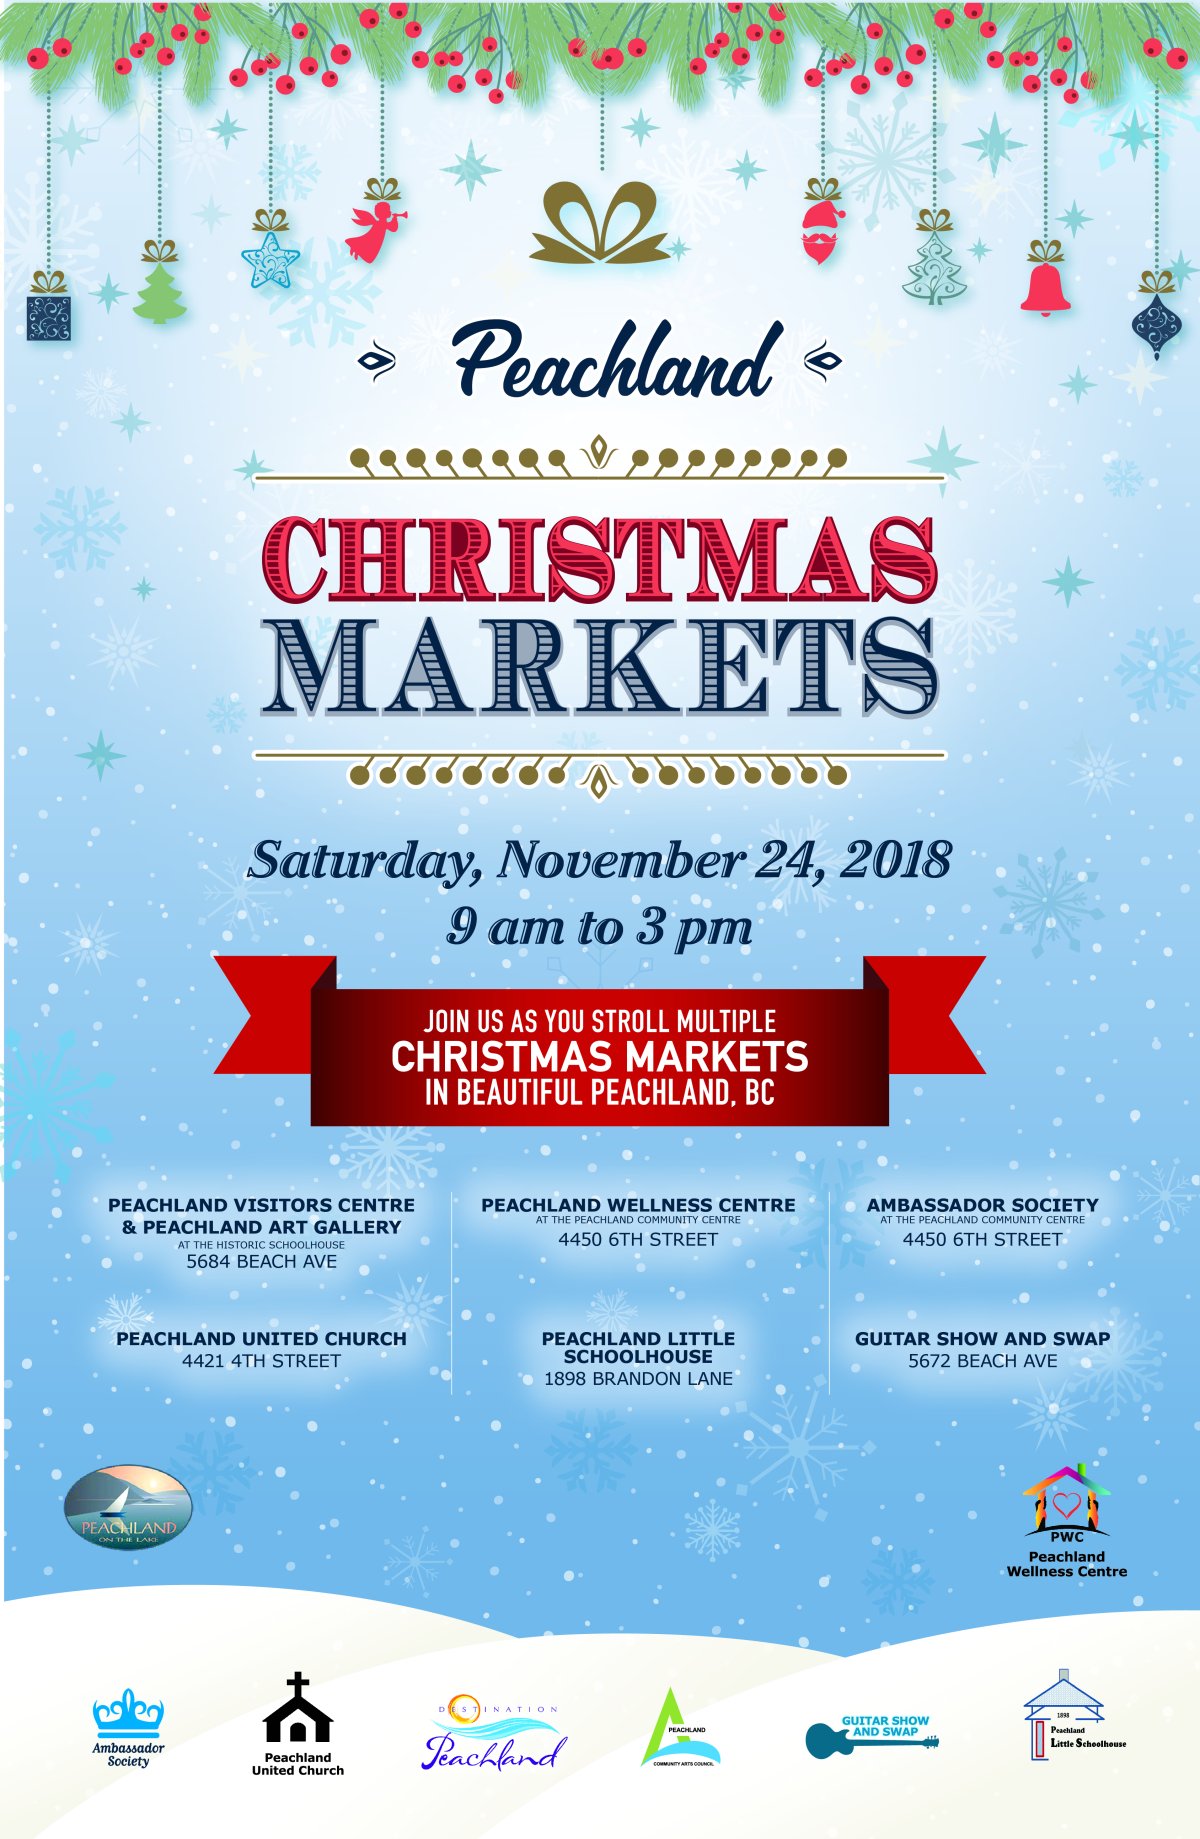 Peachland Christmas Markets - image